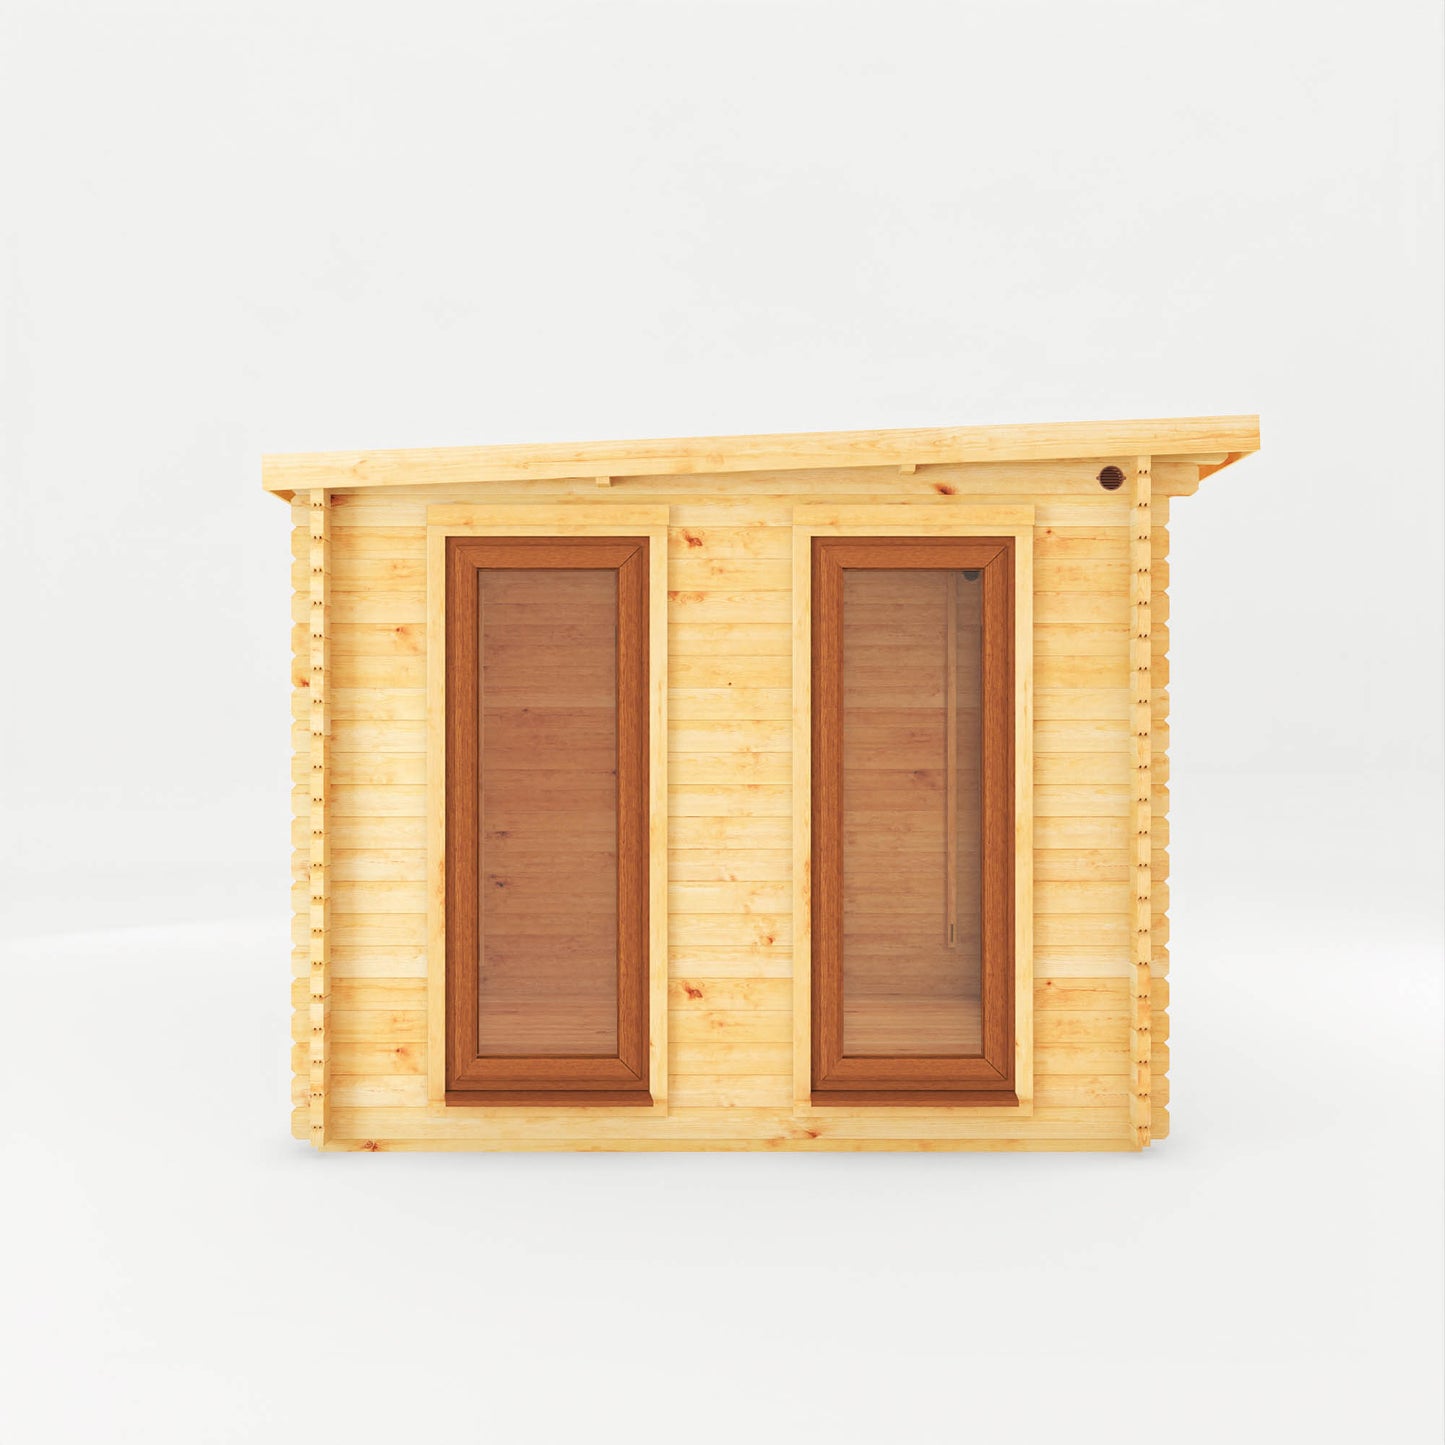 The 3m x 3m Wren Pent Log Cabin with Oak UPVC